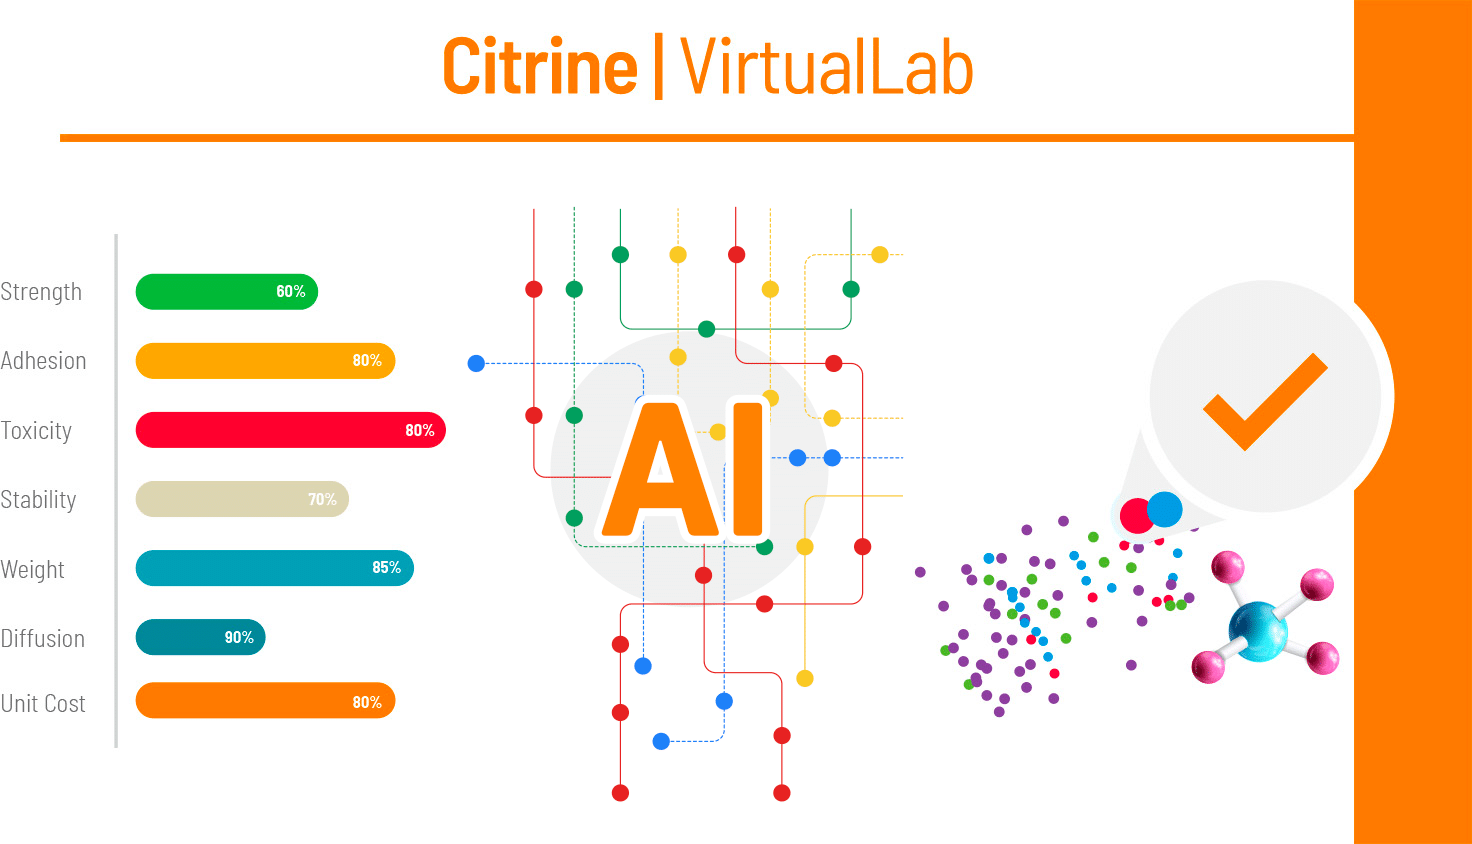 Citrine VirtualLab